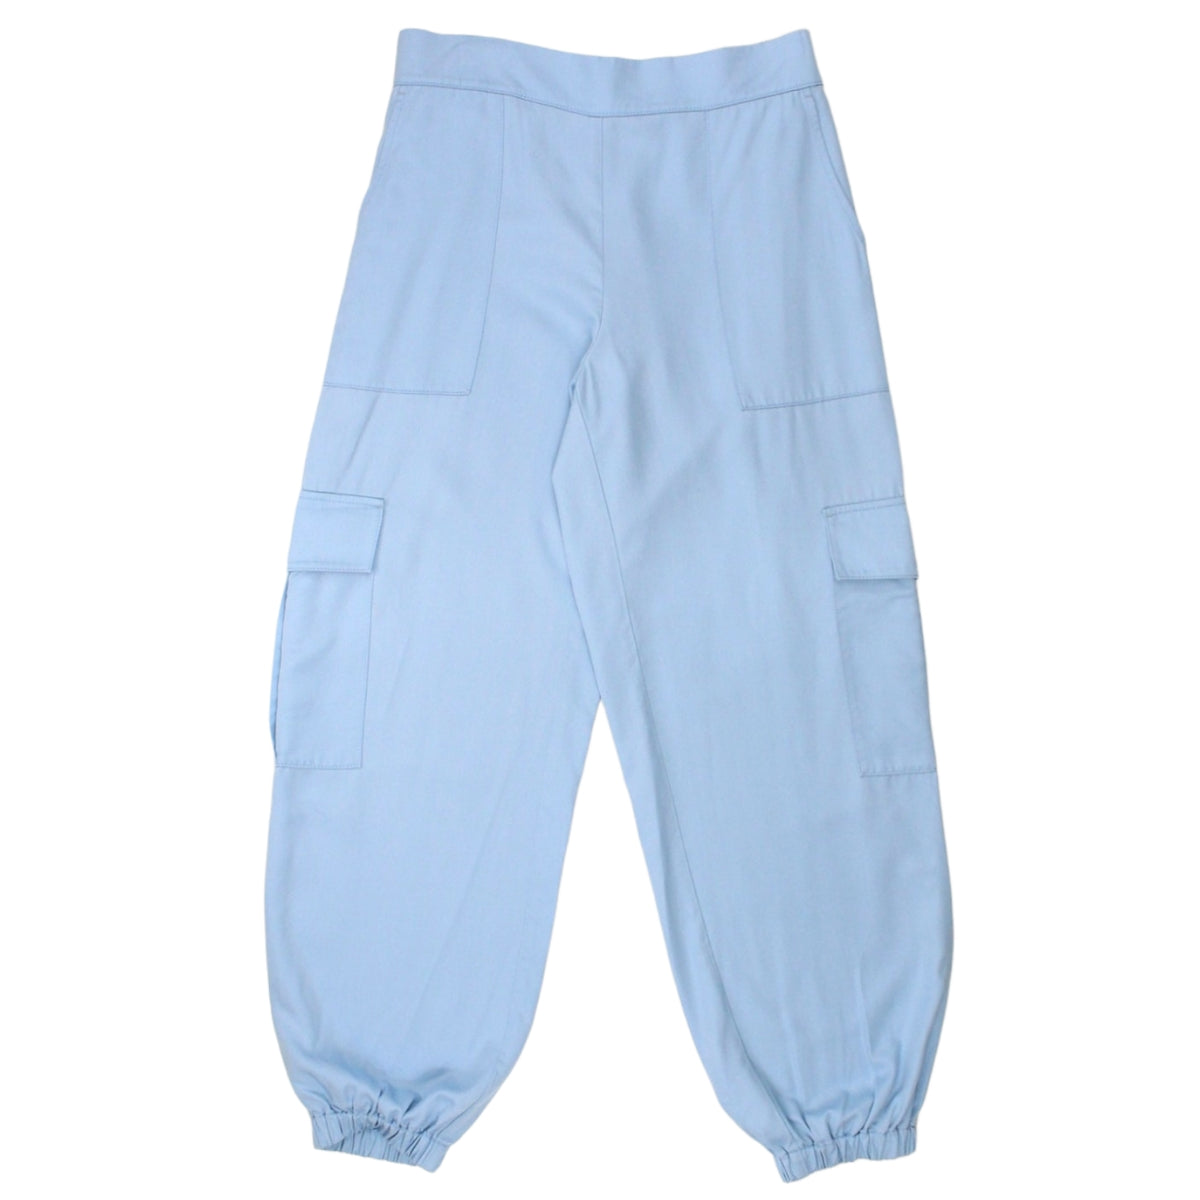 NRBY Sky Blue Cargo Pants - Sample